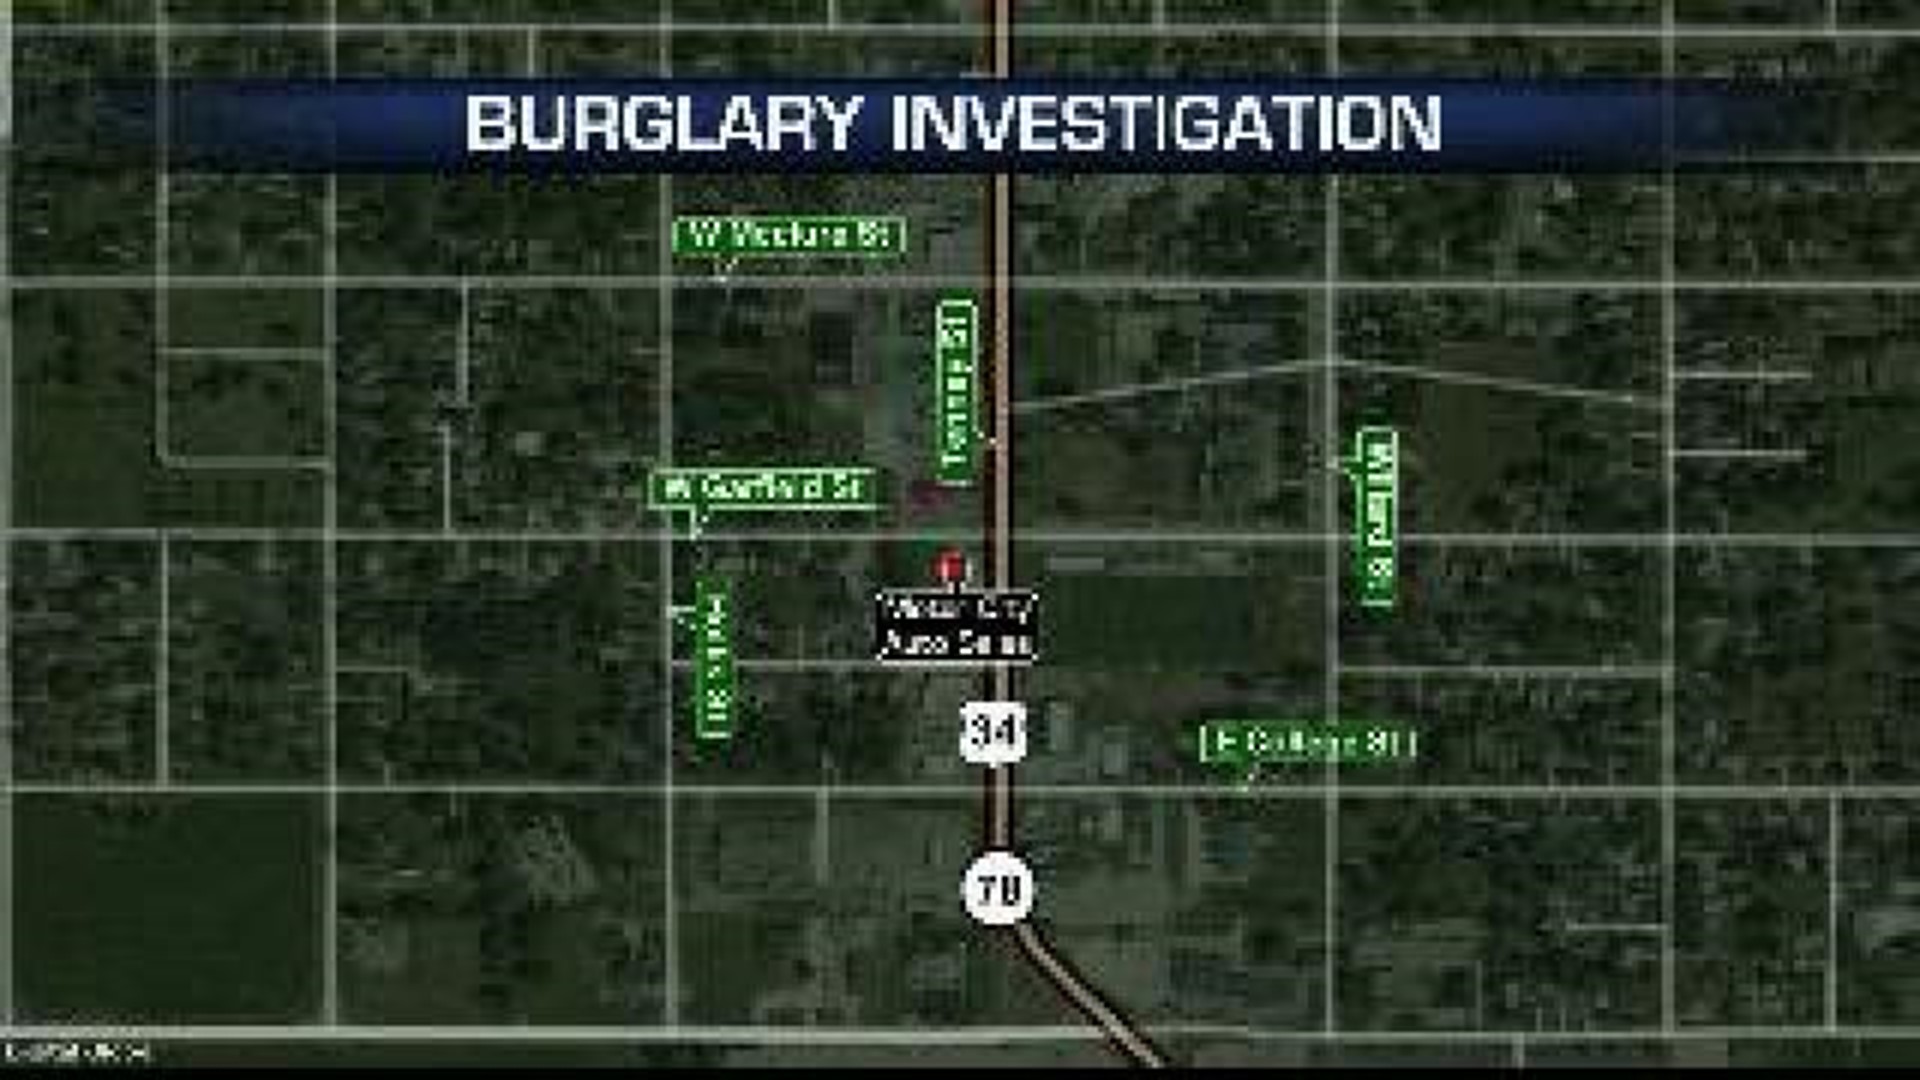 Kewanee burglary investigation